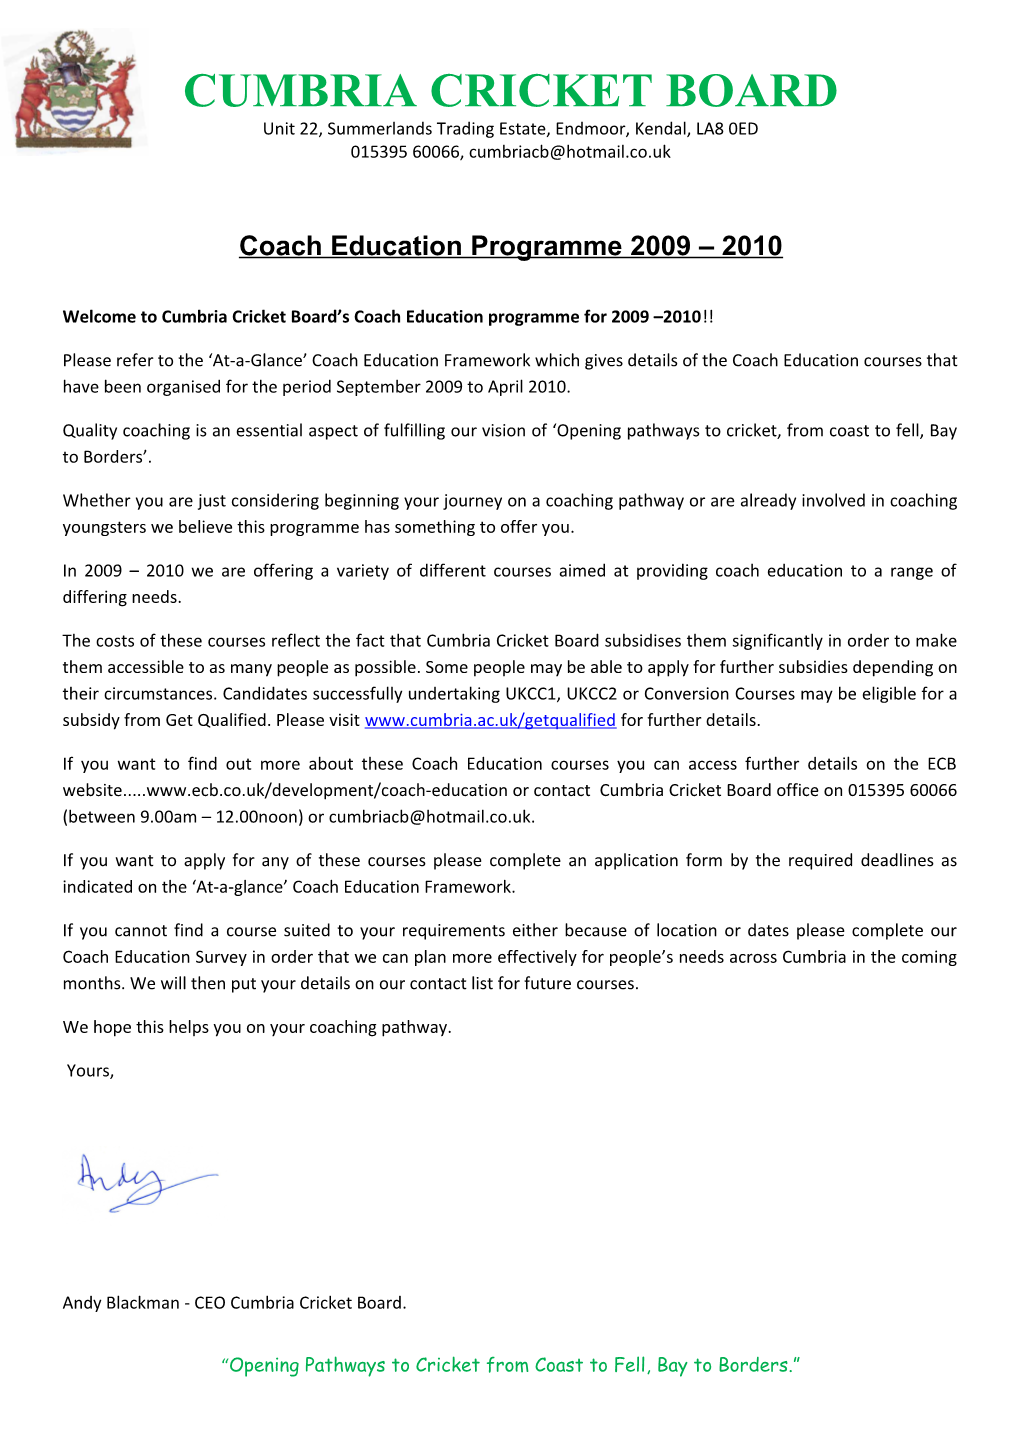 Coach Education Programme 2009 2010